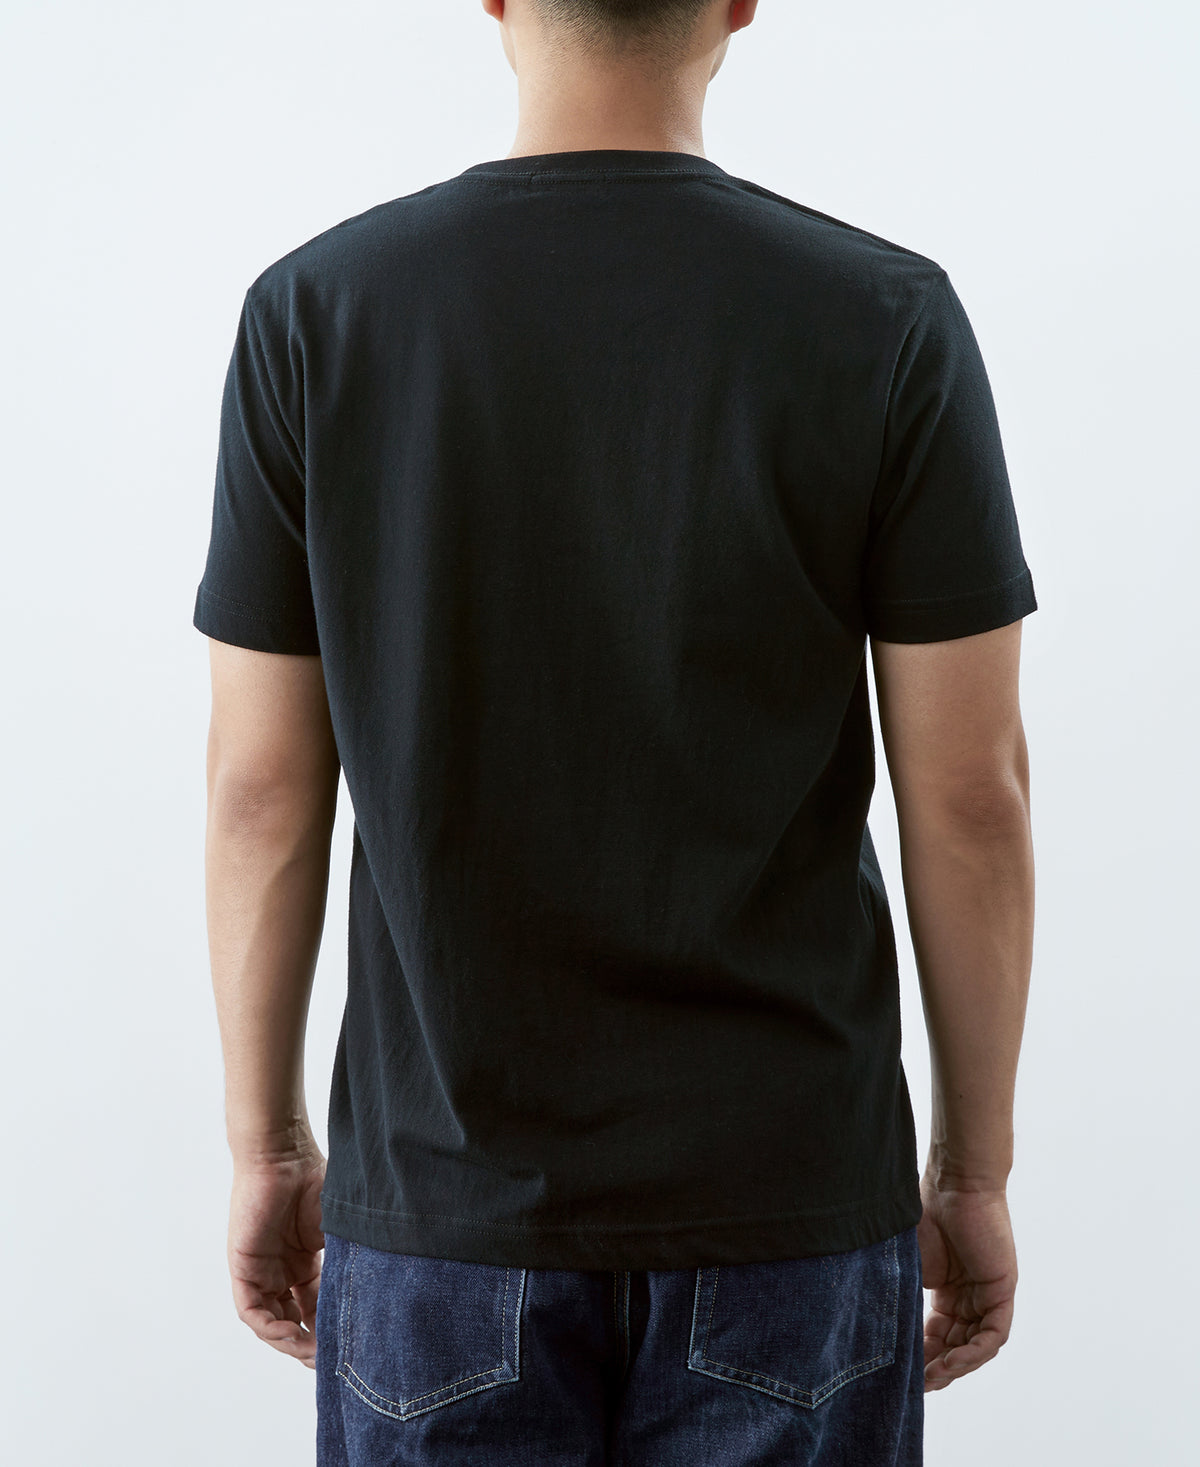 7.2 oz Cotton V-Neck Tubular T-Shirt - Black